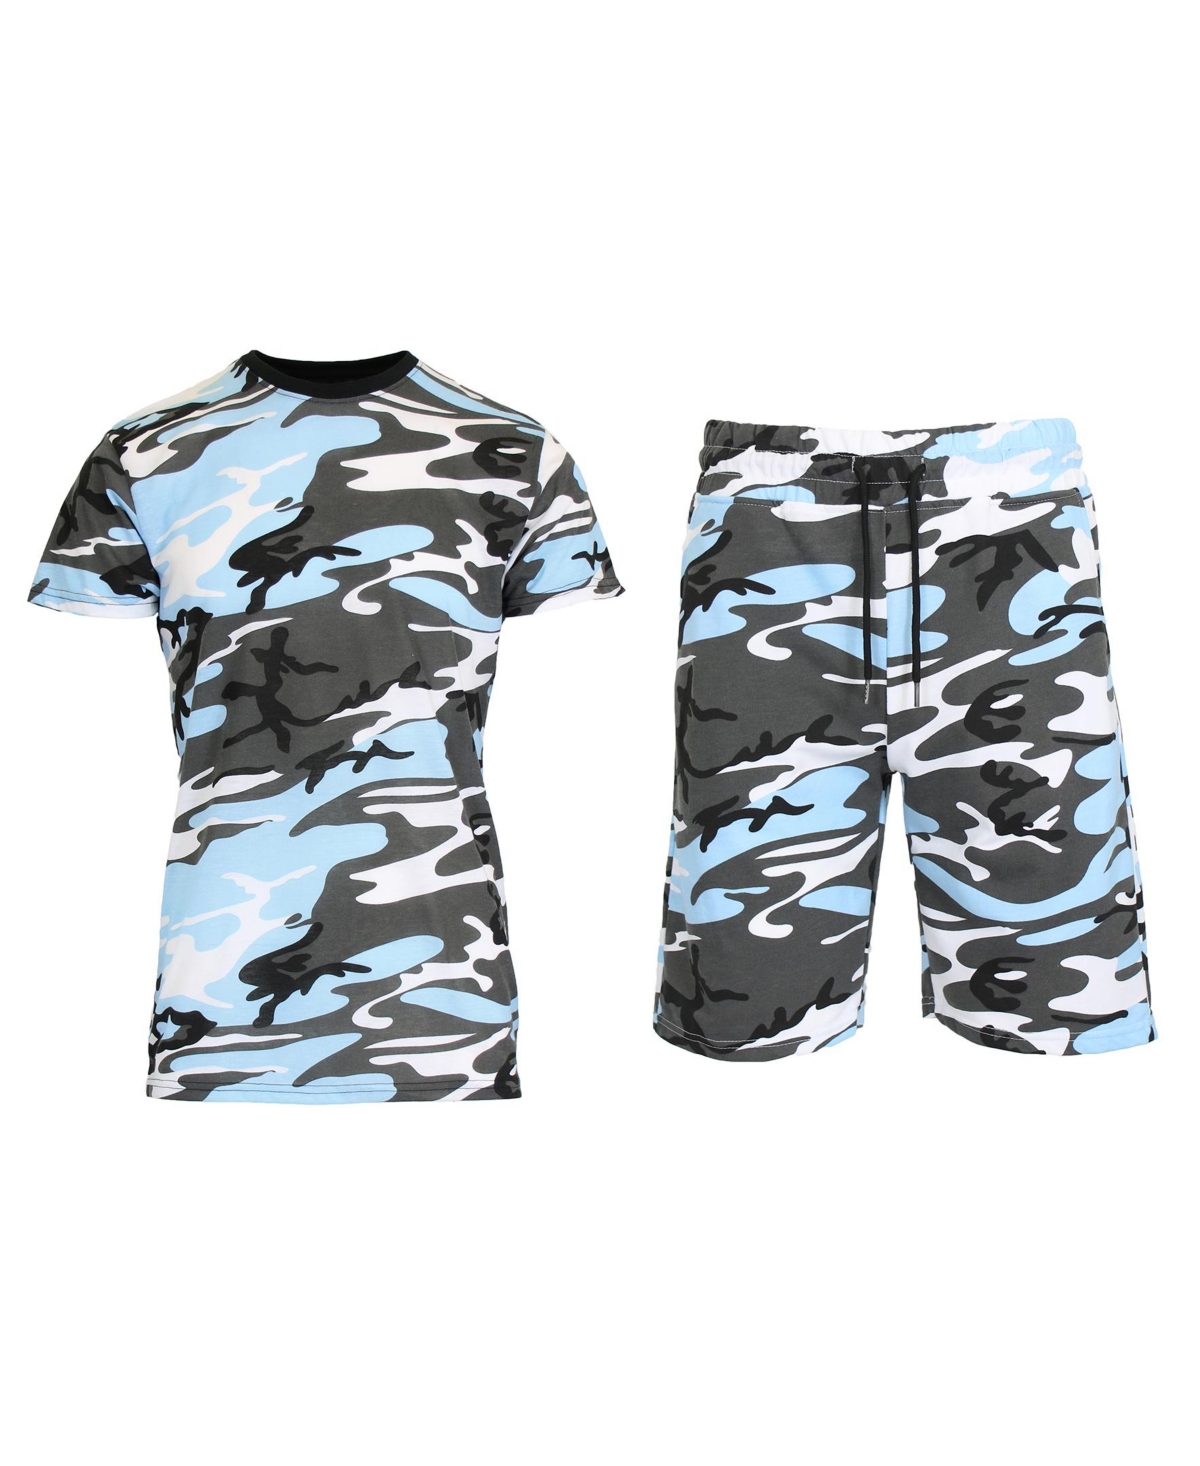 Men's Camo Short Sleeve T-shirt and Shorts, 2-Piece Set - Mint Camo